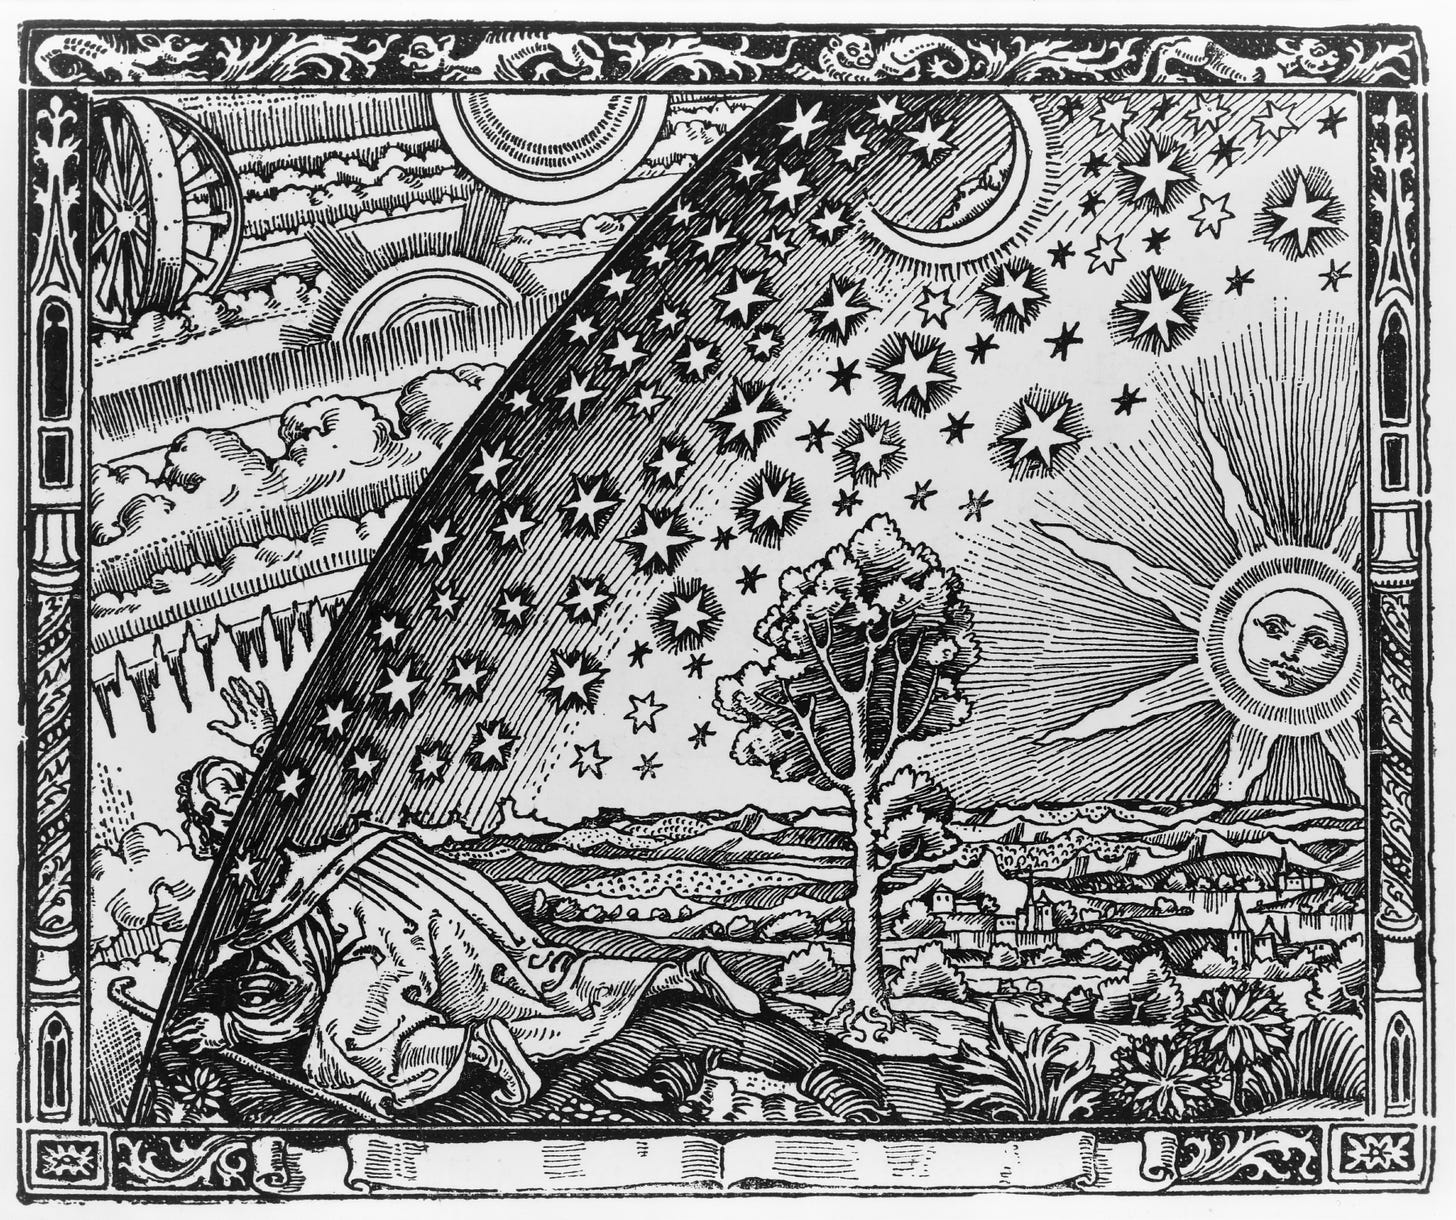 File:Flammarion.jpg - Wikipedia